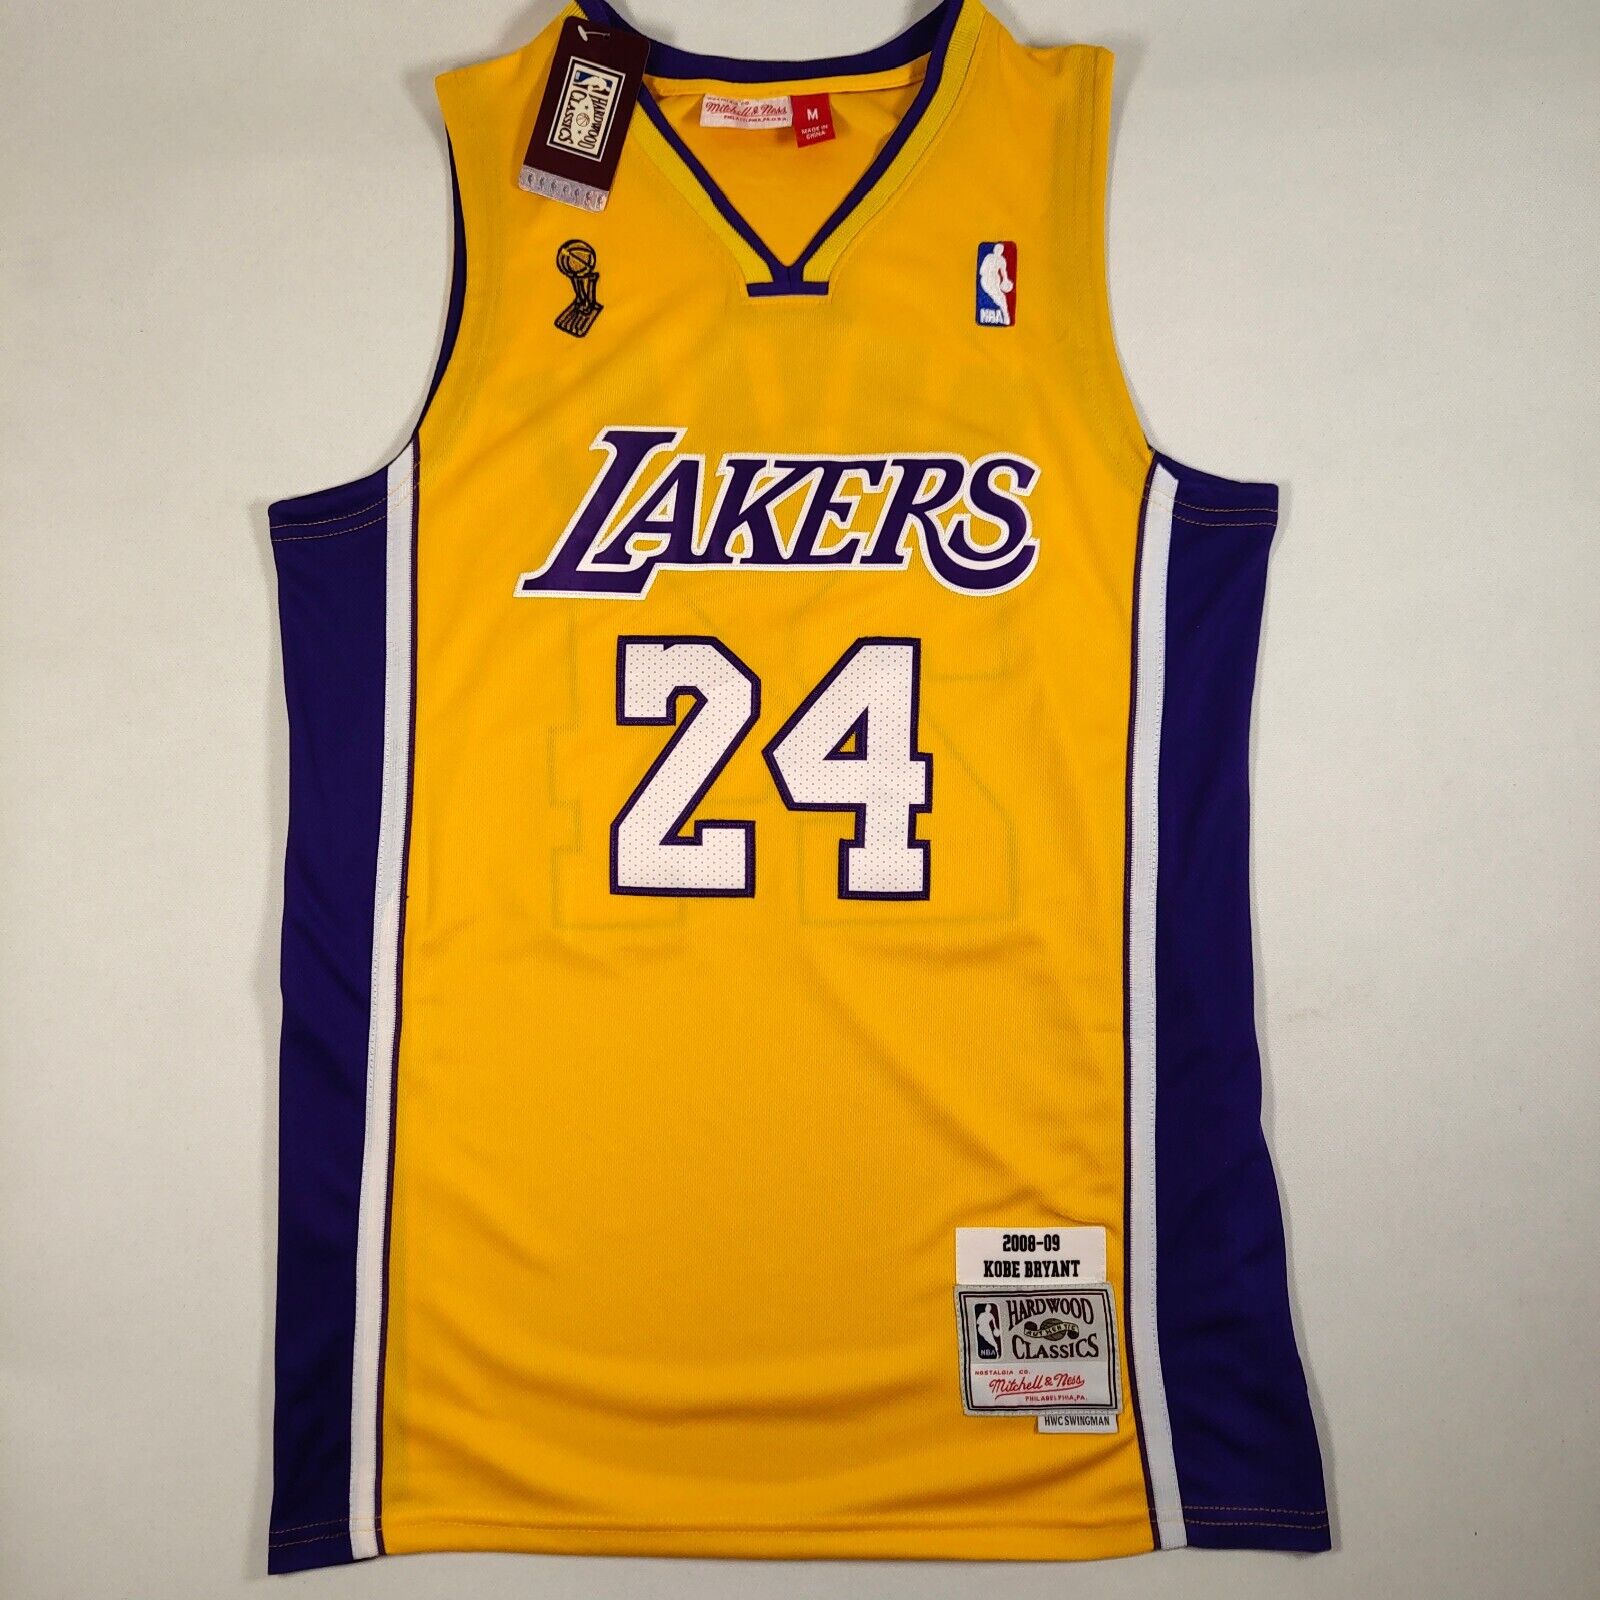 Kobe Bryant No. 24 jersey, championship version embroidered